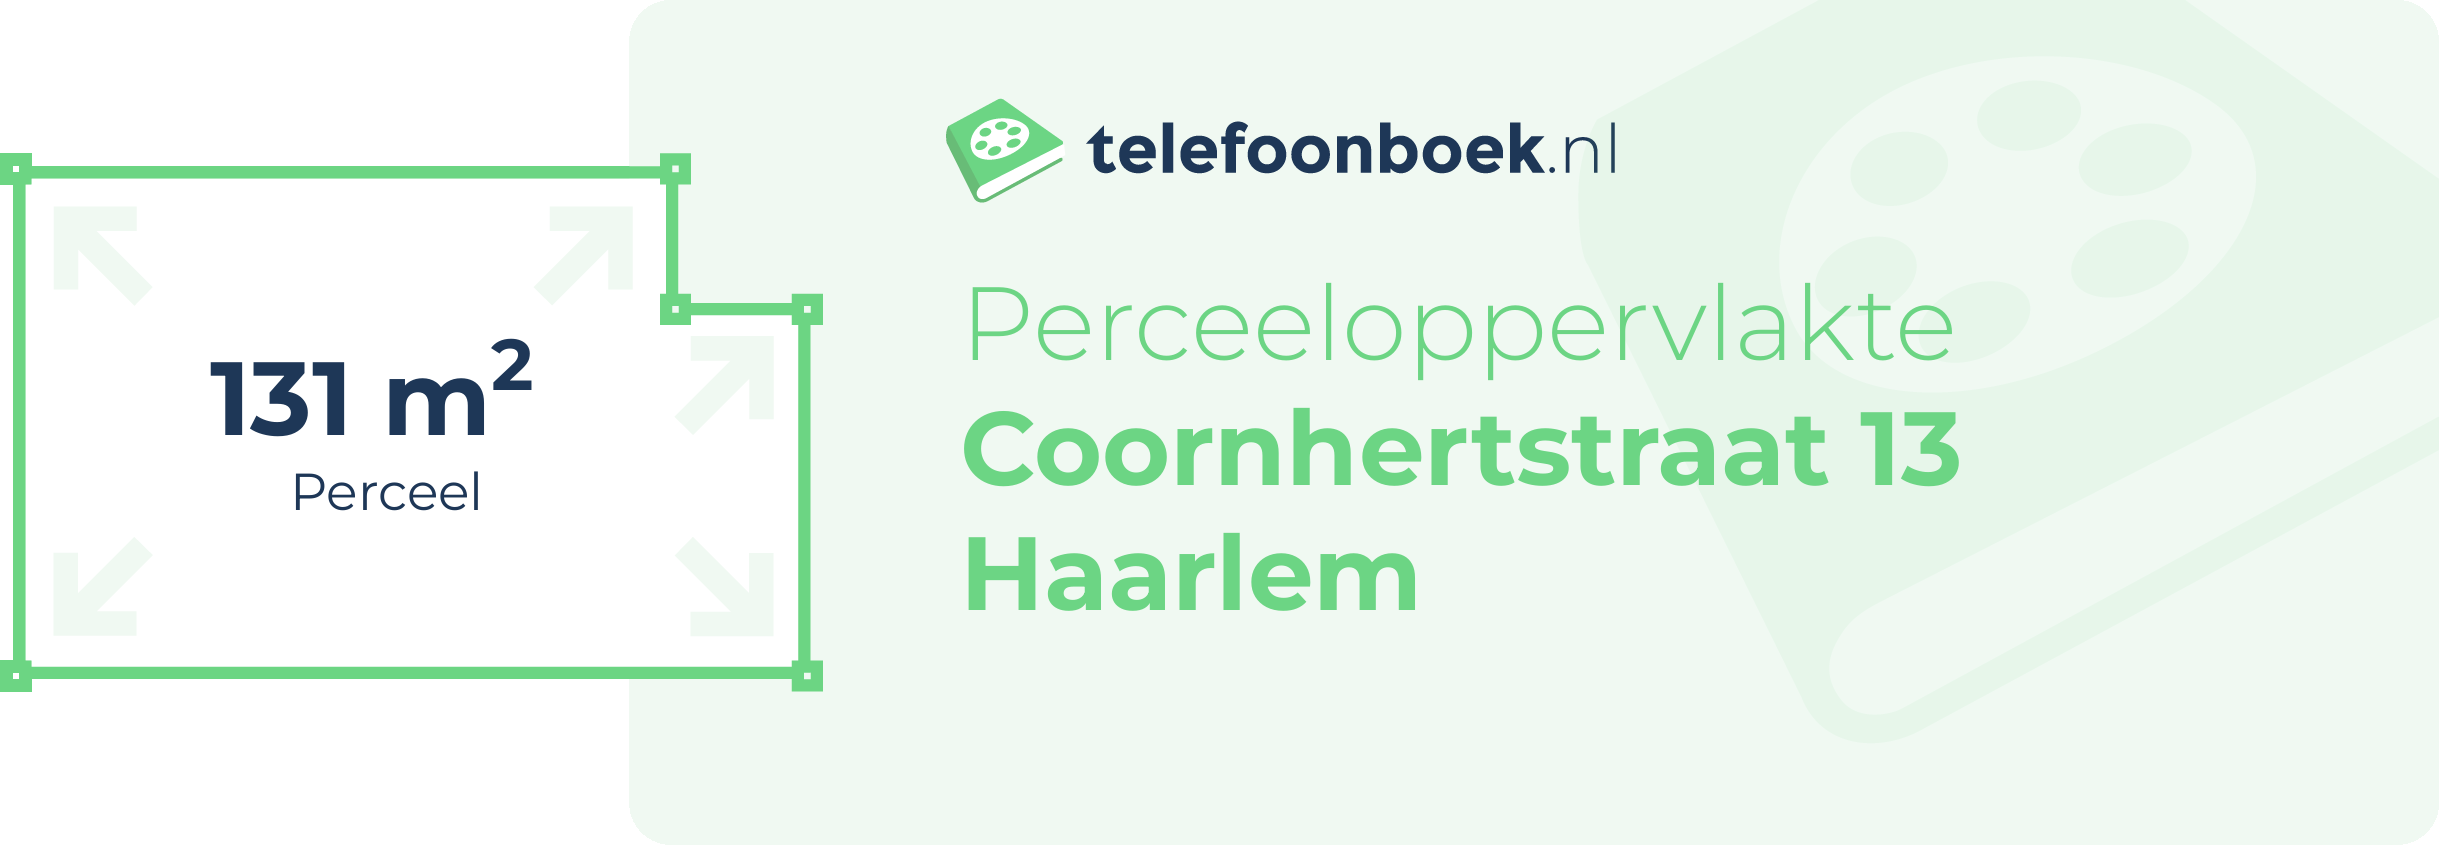 Perceeloppervlakte Coornhertstraat 13 Haarlem